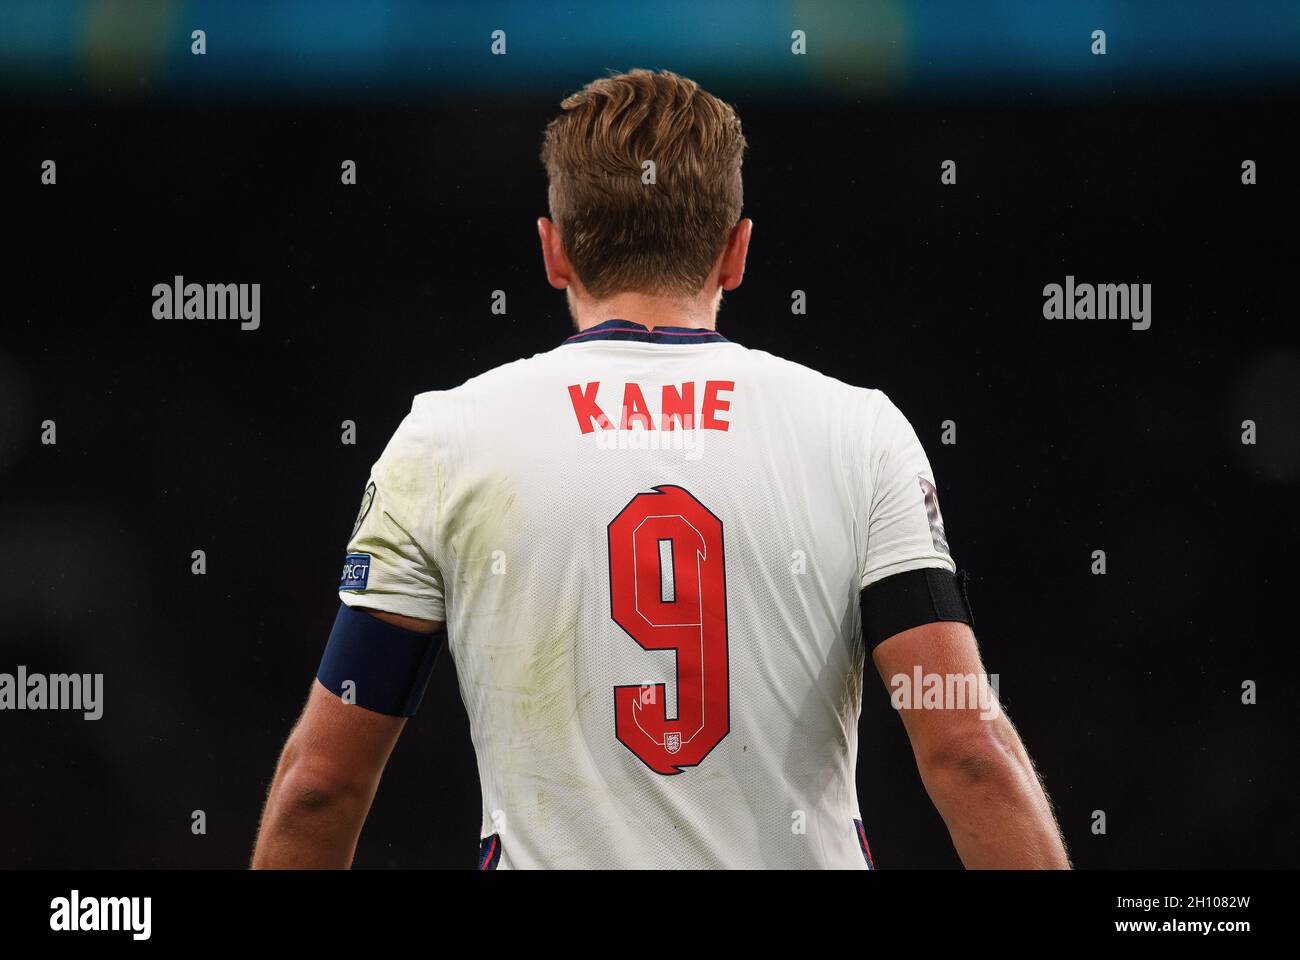 Angleterre v Hongrie - coupe du monde de la FIFA 2022 - Stade Wembley Harry Kane d'Angleterre pendant le qualificateur de coupe du monde à Wembley.Image : Mark pain Banque D'Images